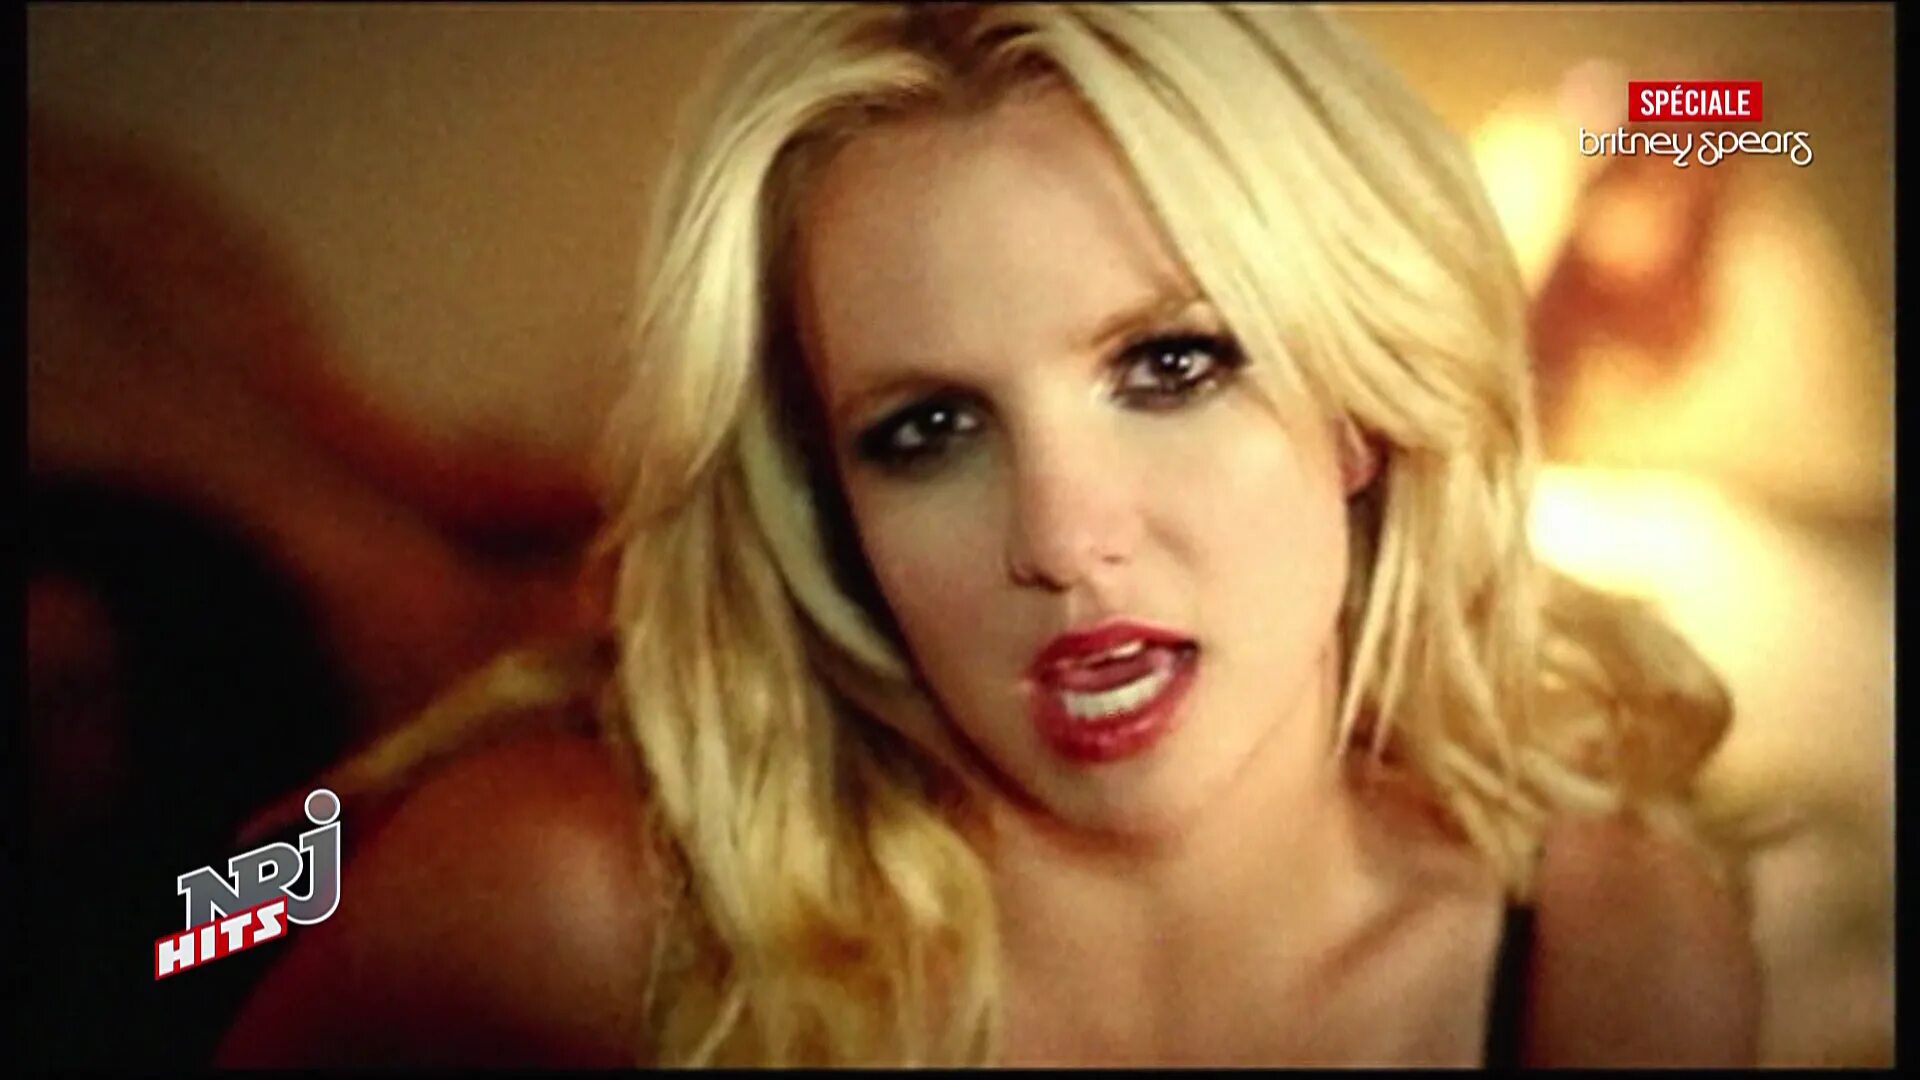 U seek. Спирс ИФ Ю сик Эми. Britney Amy. Бритни Спирс if you seek Amy. Бритни Спирс язык.